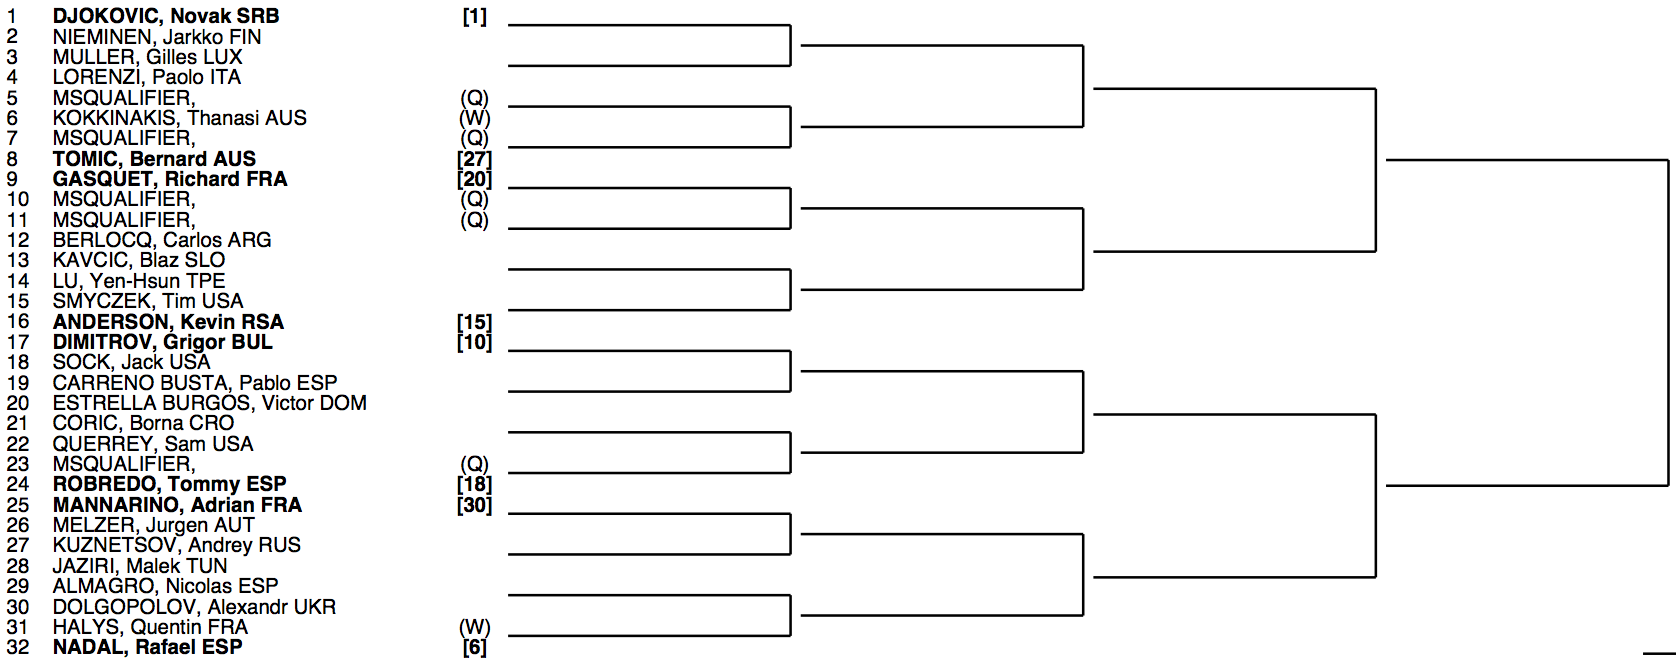 Roland Garros 2015 Draw 1:4